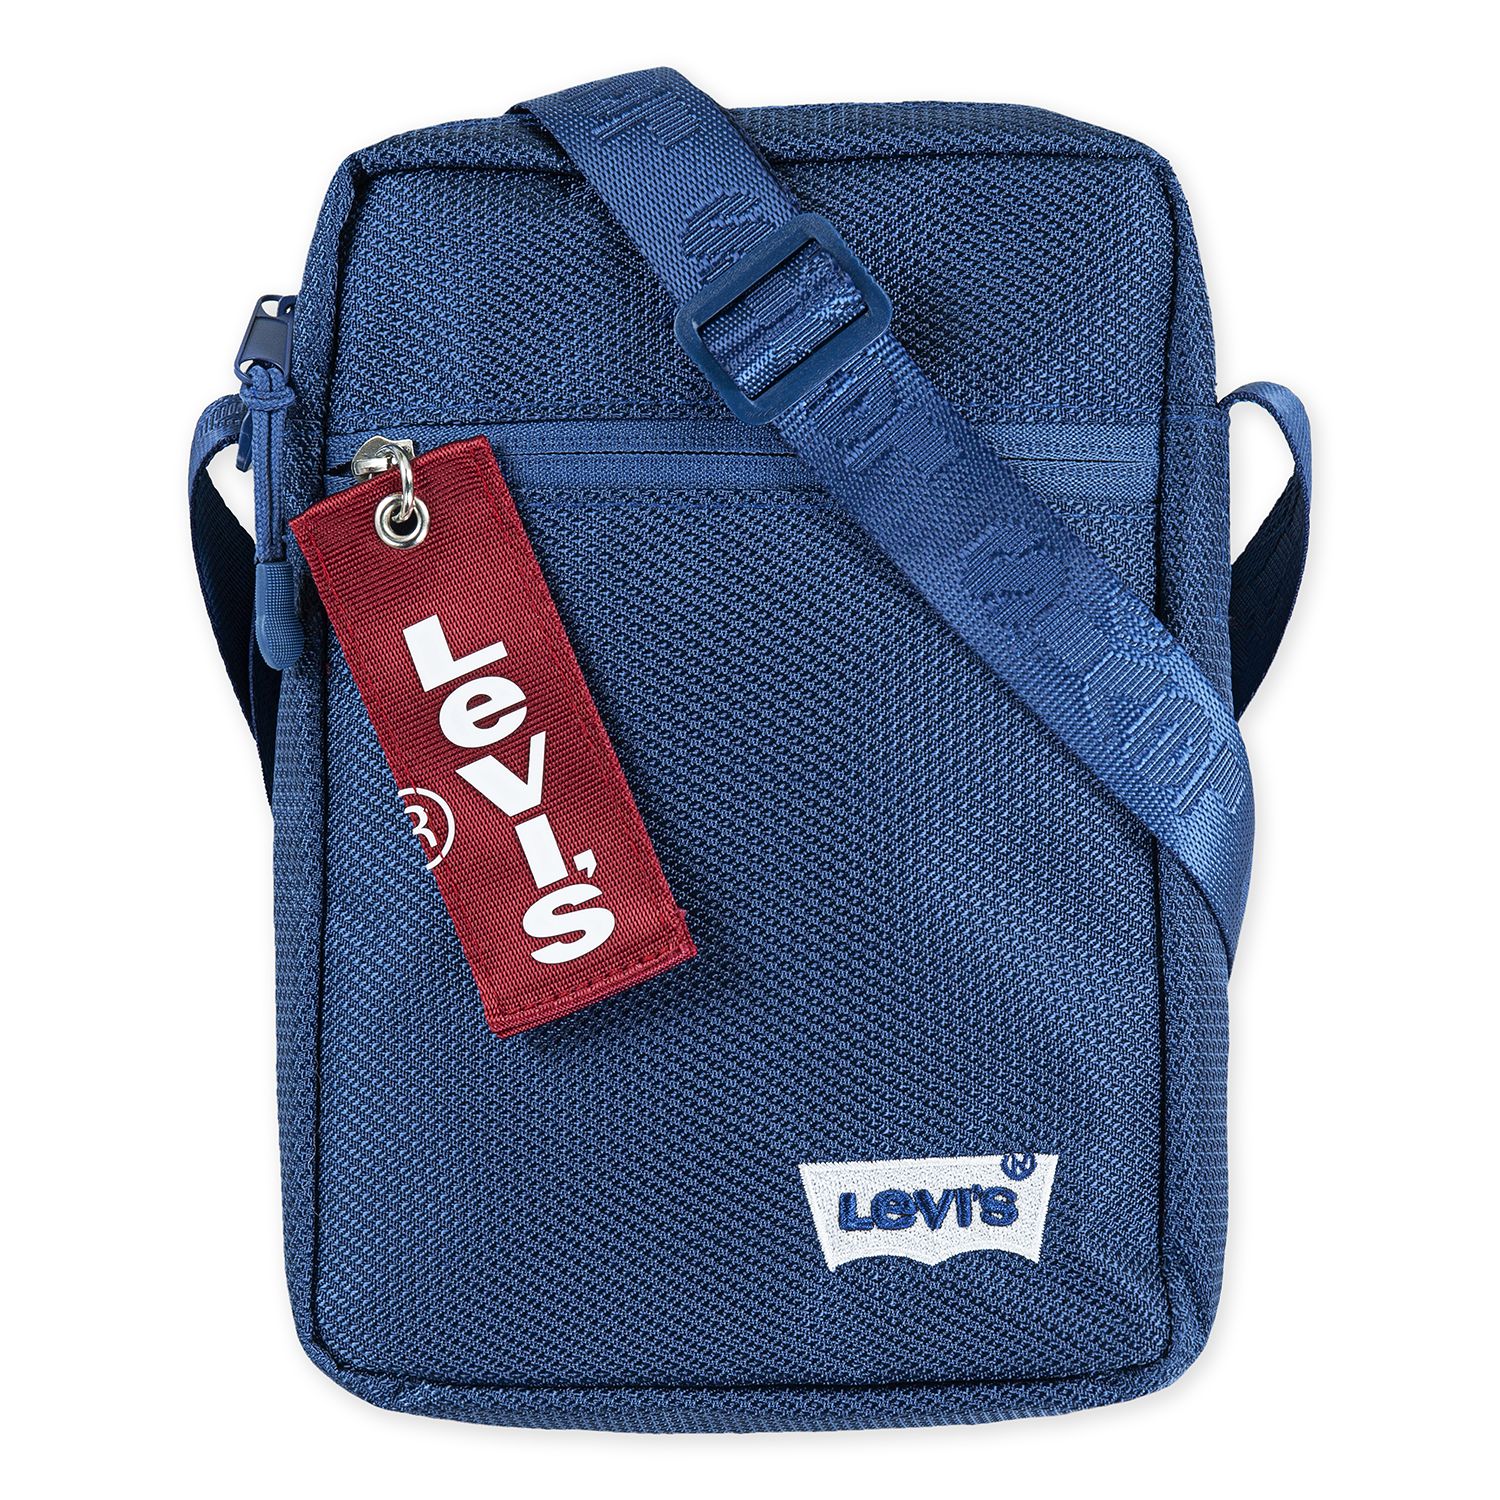 levis crossbody bag